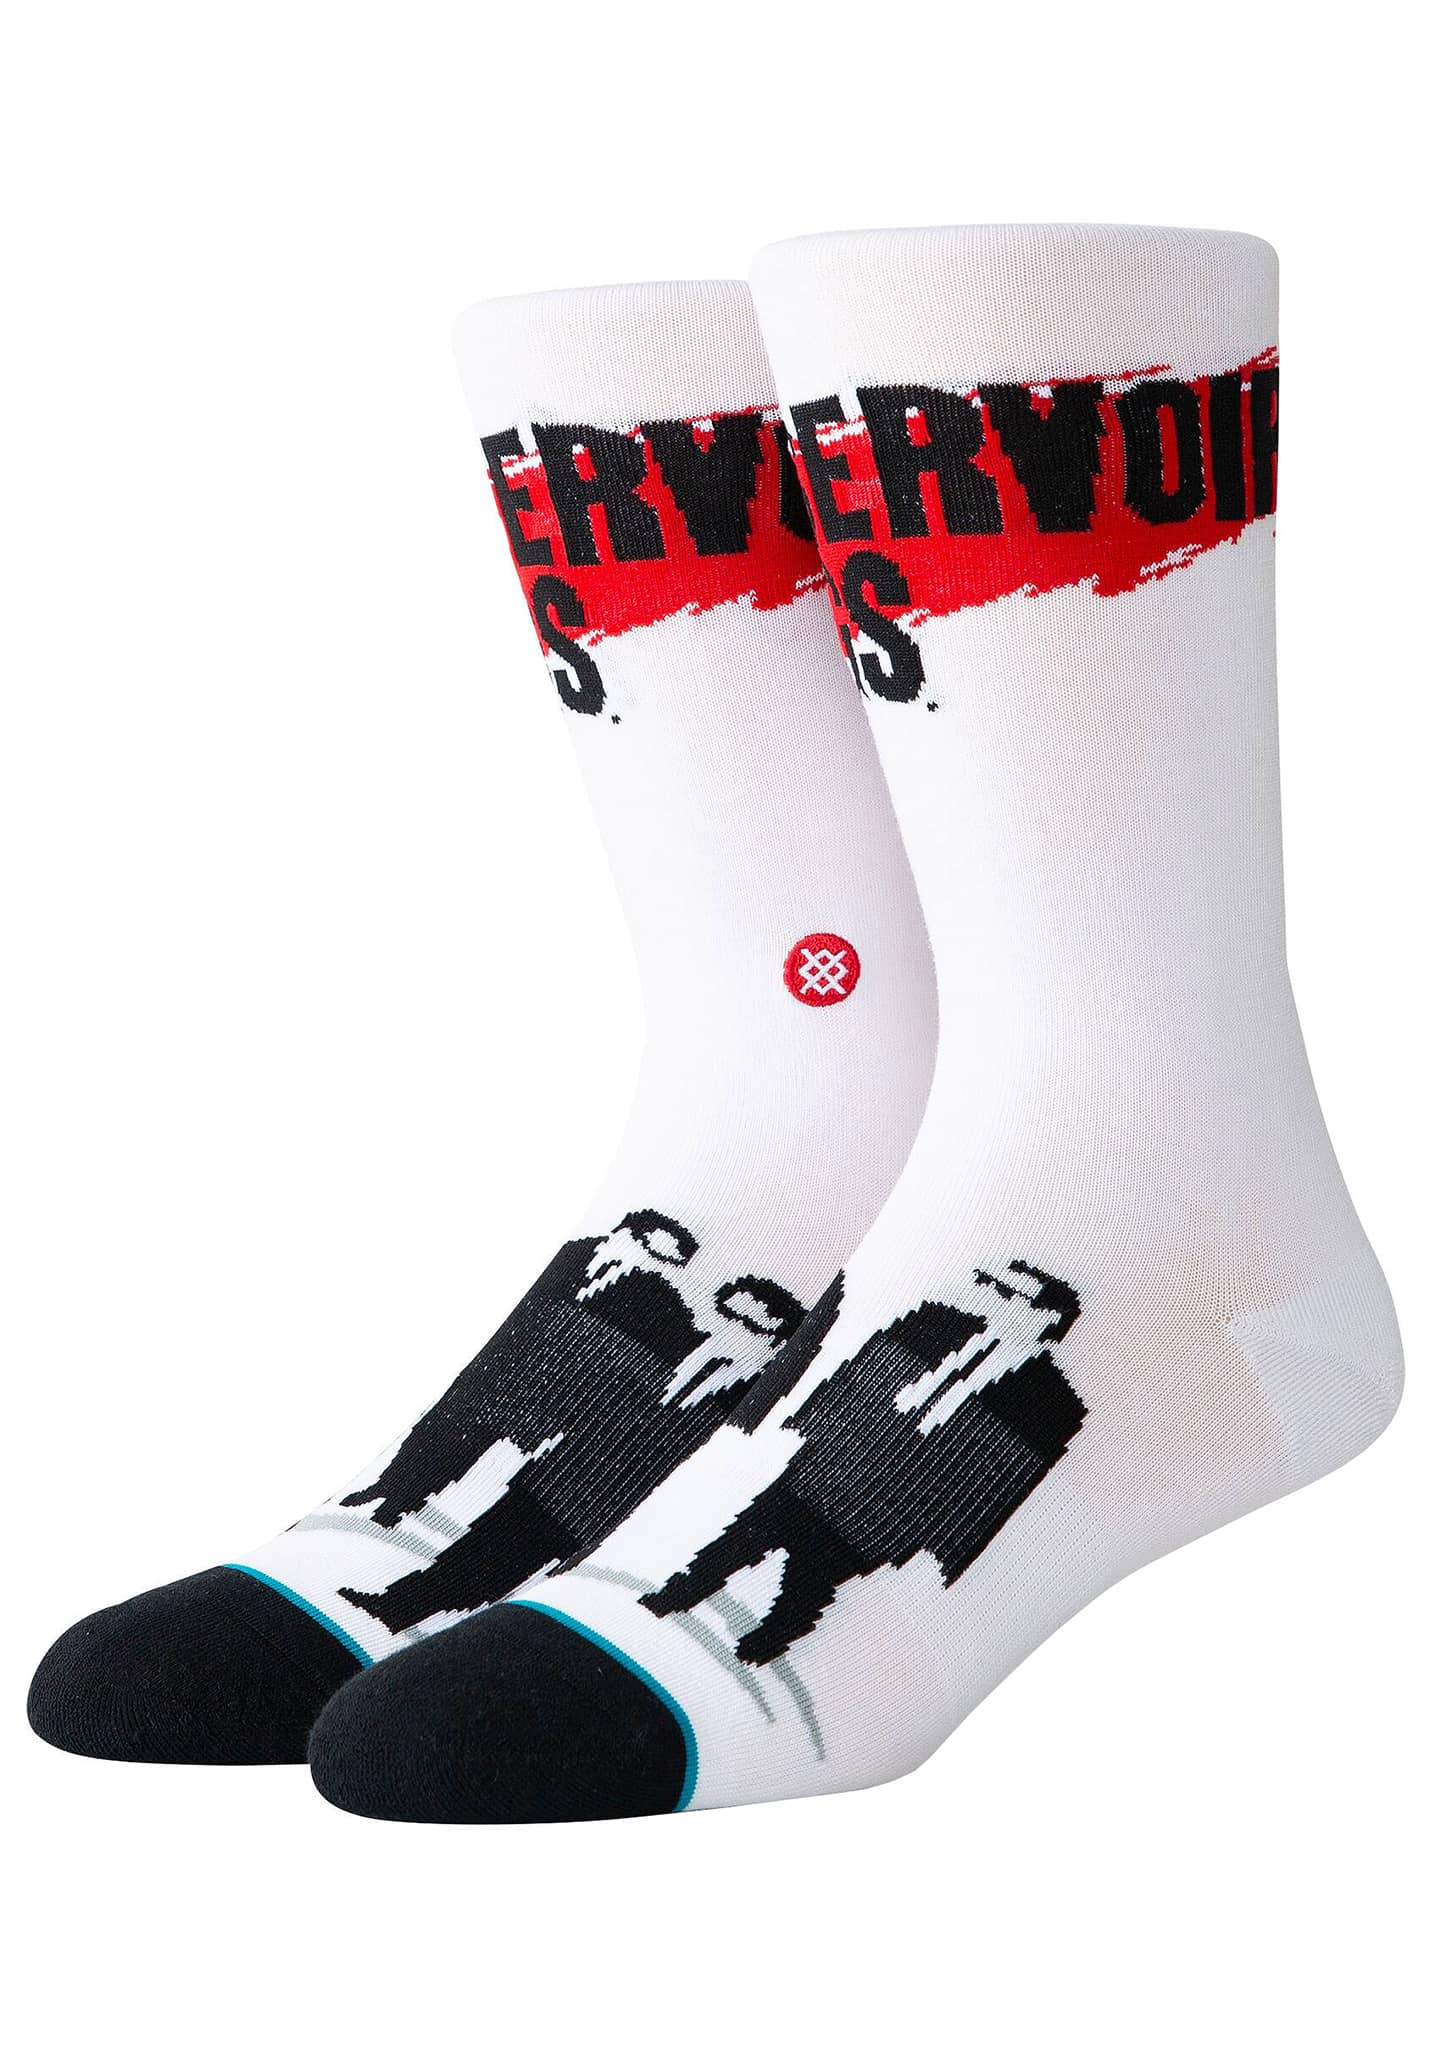 Stance Reservoir Dogs Lange Socken wht L